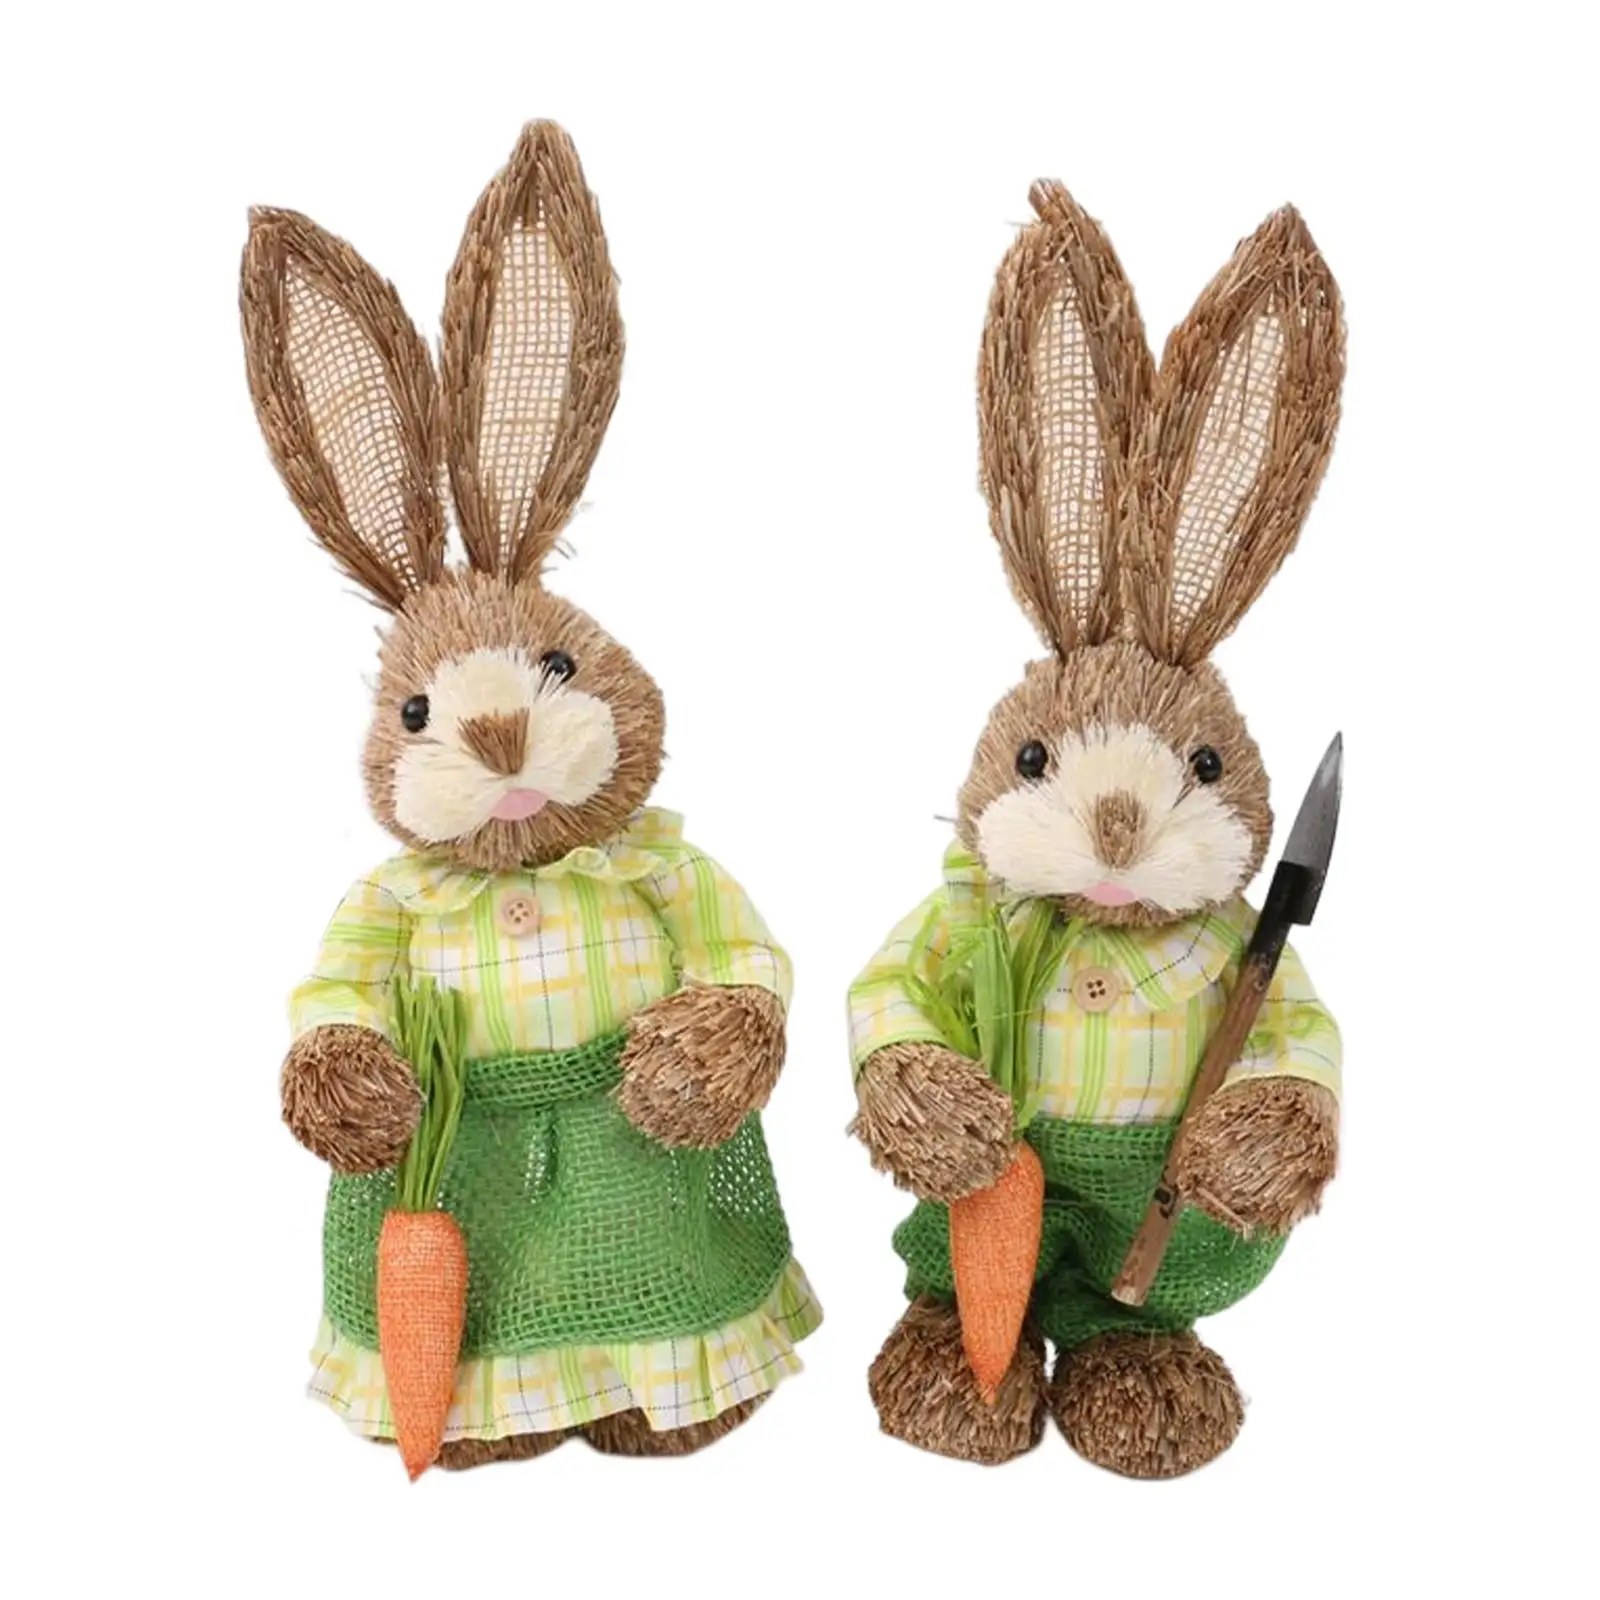 2Pcs Figurines Animal Crafts Art Straw Easter Decor Gardener Rabbits Statues for Indoor Floor Holiday Outdoor Home